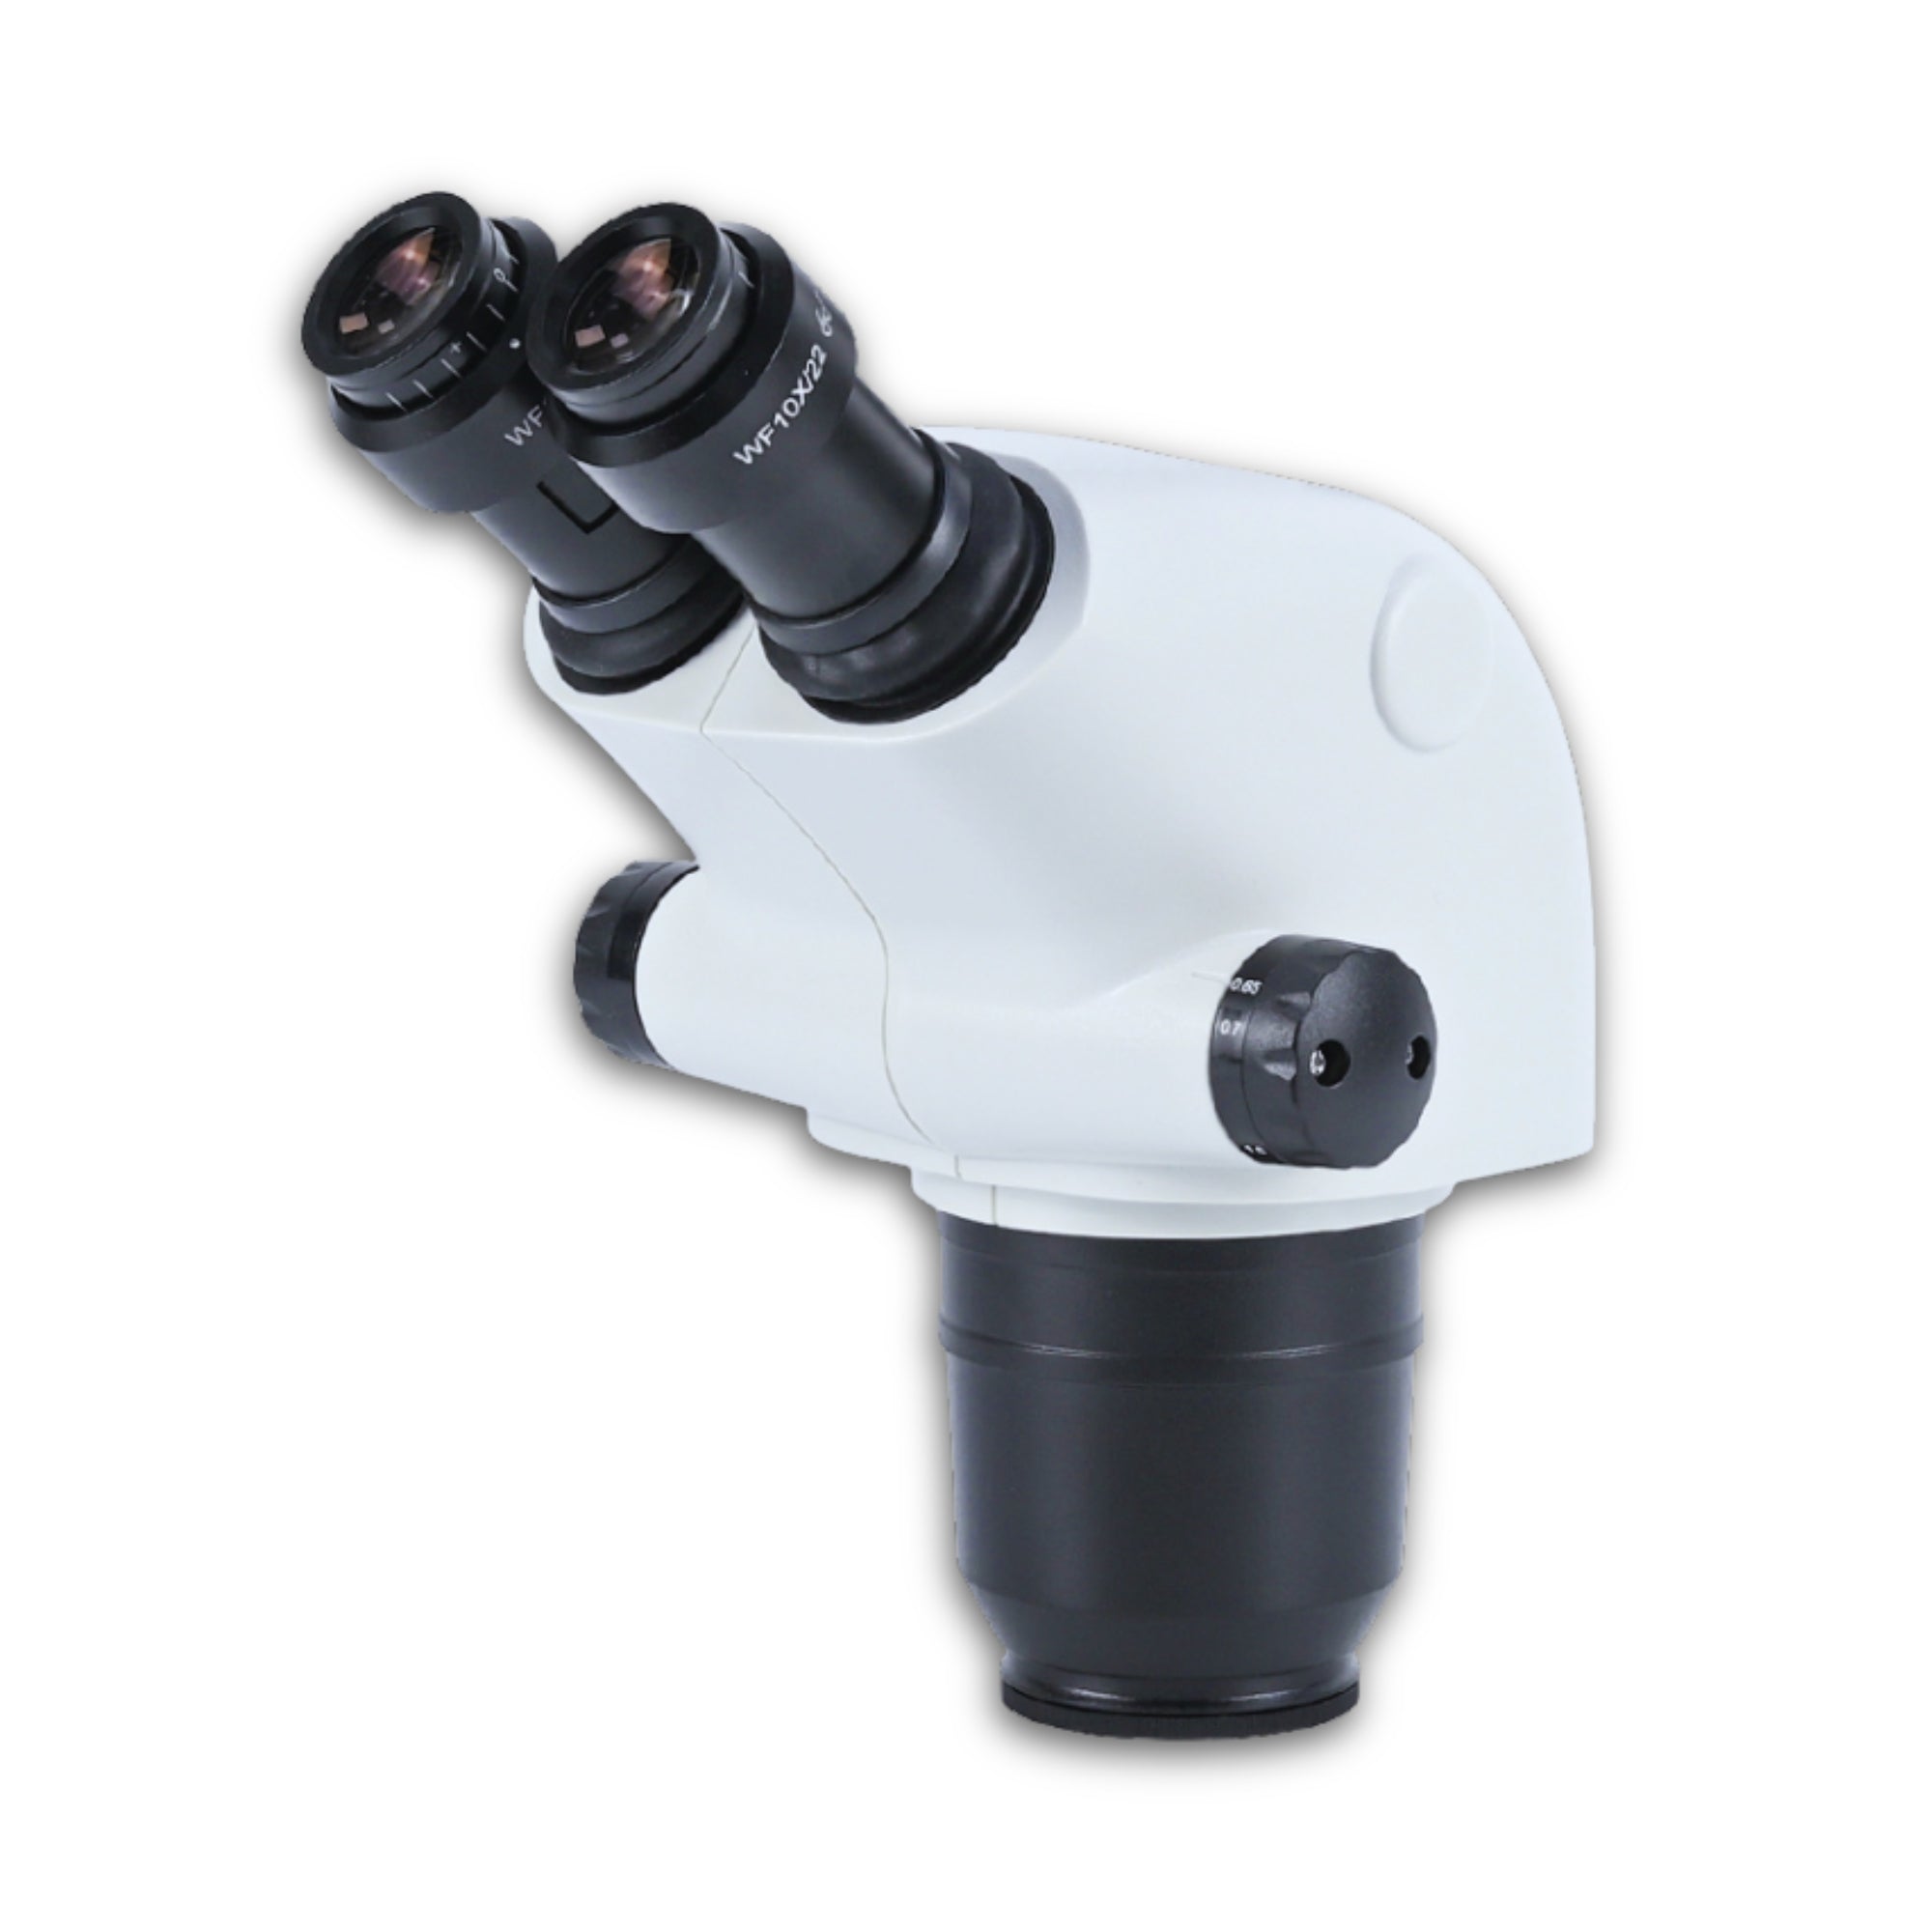 Phaser-mikroskopset med stativ med stativ avsett för fast montering på guldsmeds- eller phaserbord